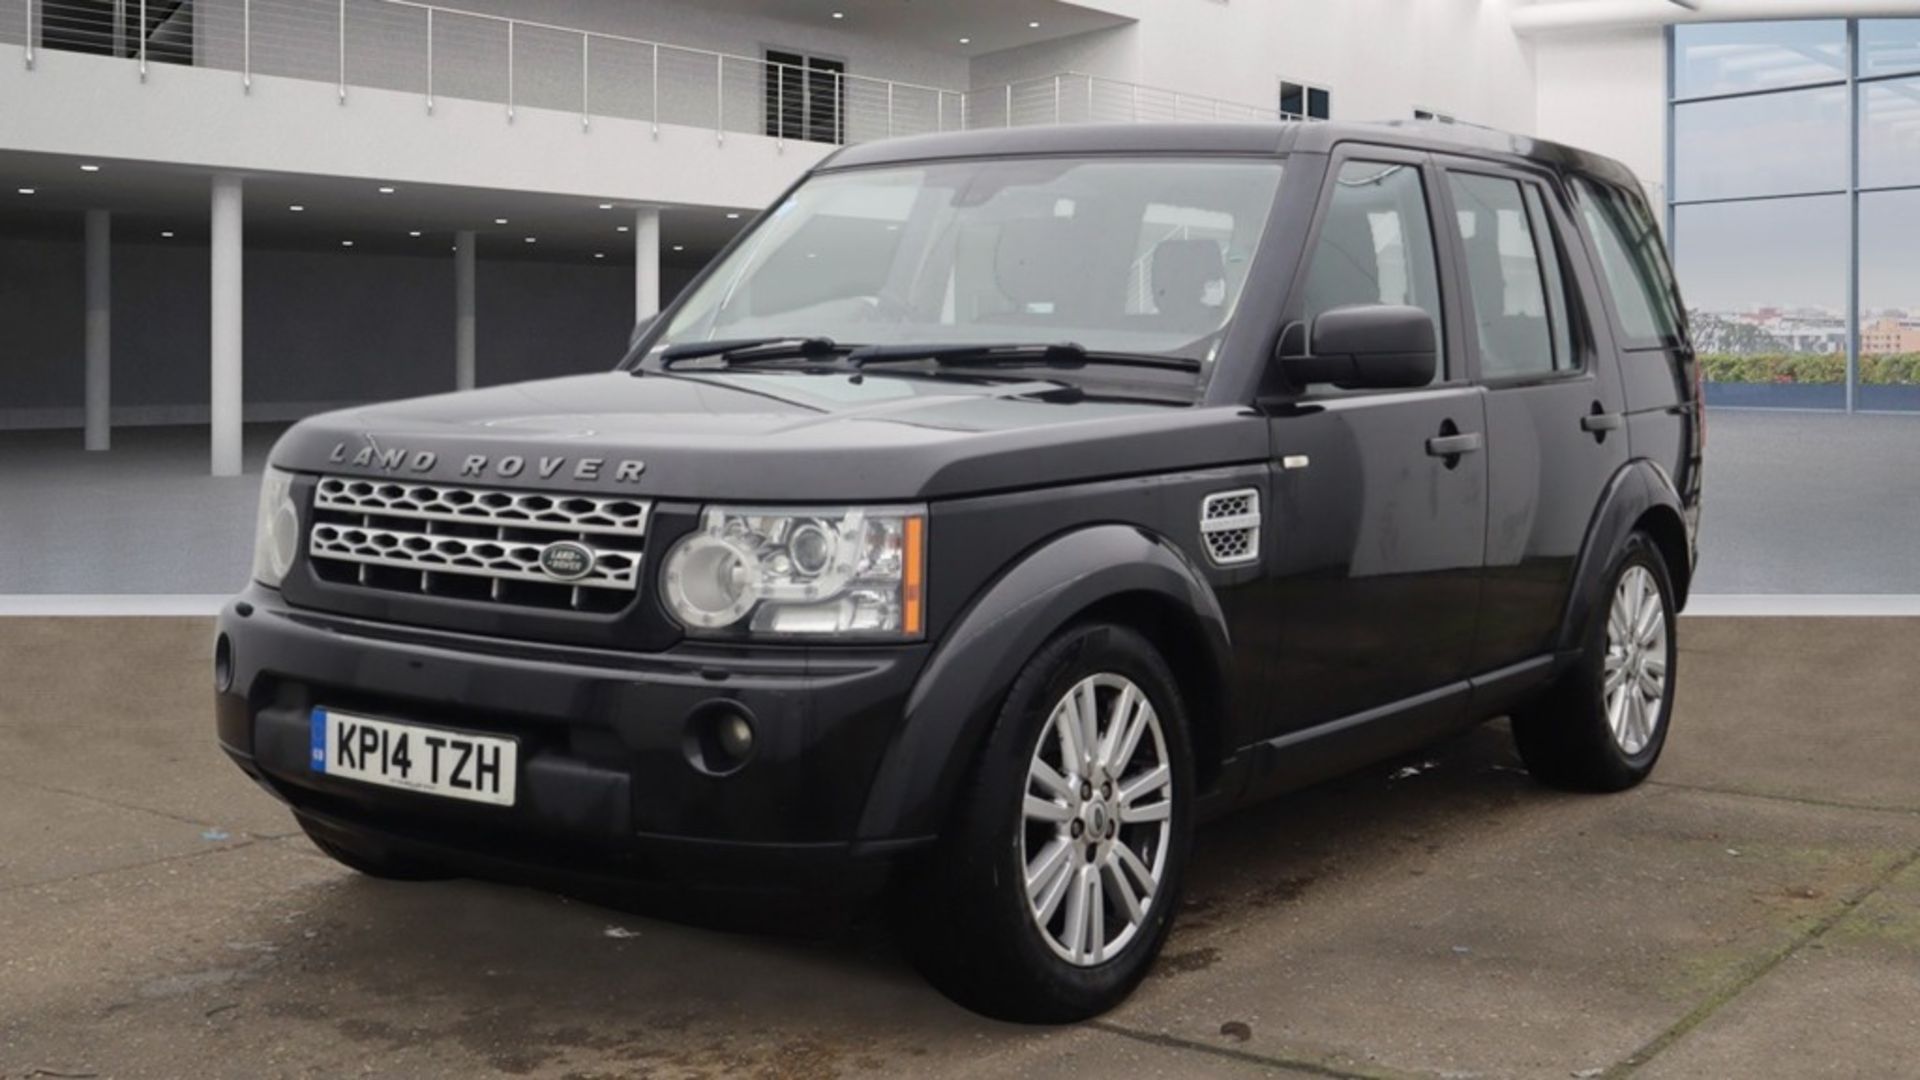 ** ON SALE **Land Rover Discovery 4 255 GS 3.0 SDV6 2014 '14 Reg' -Alloy Wheels -Parking Sensors - Bild 2 aus 9